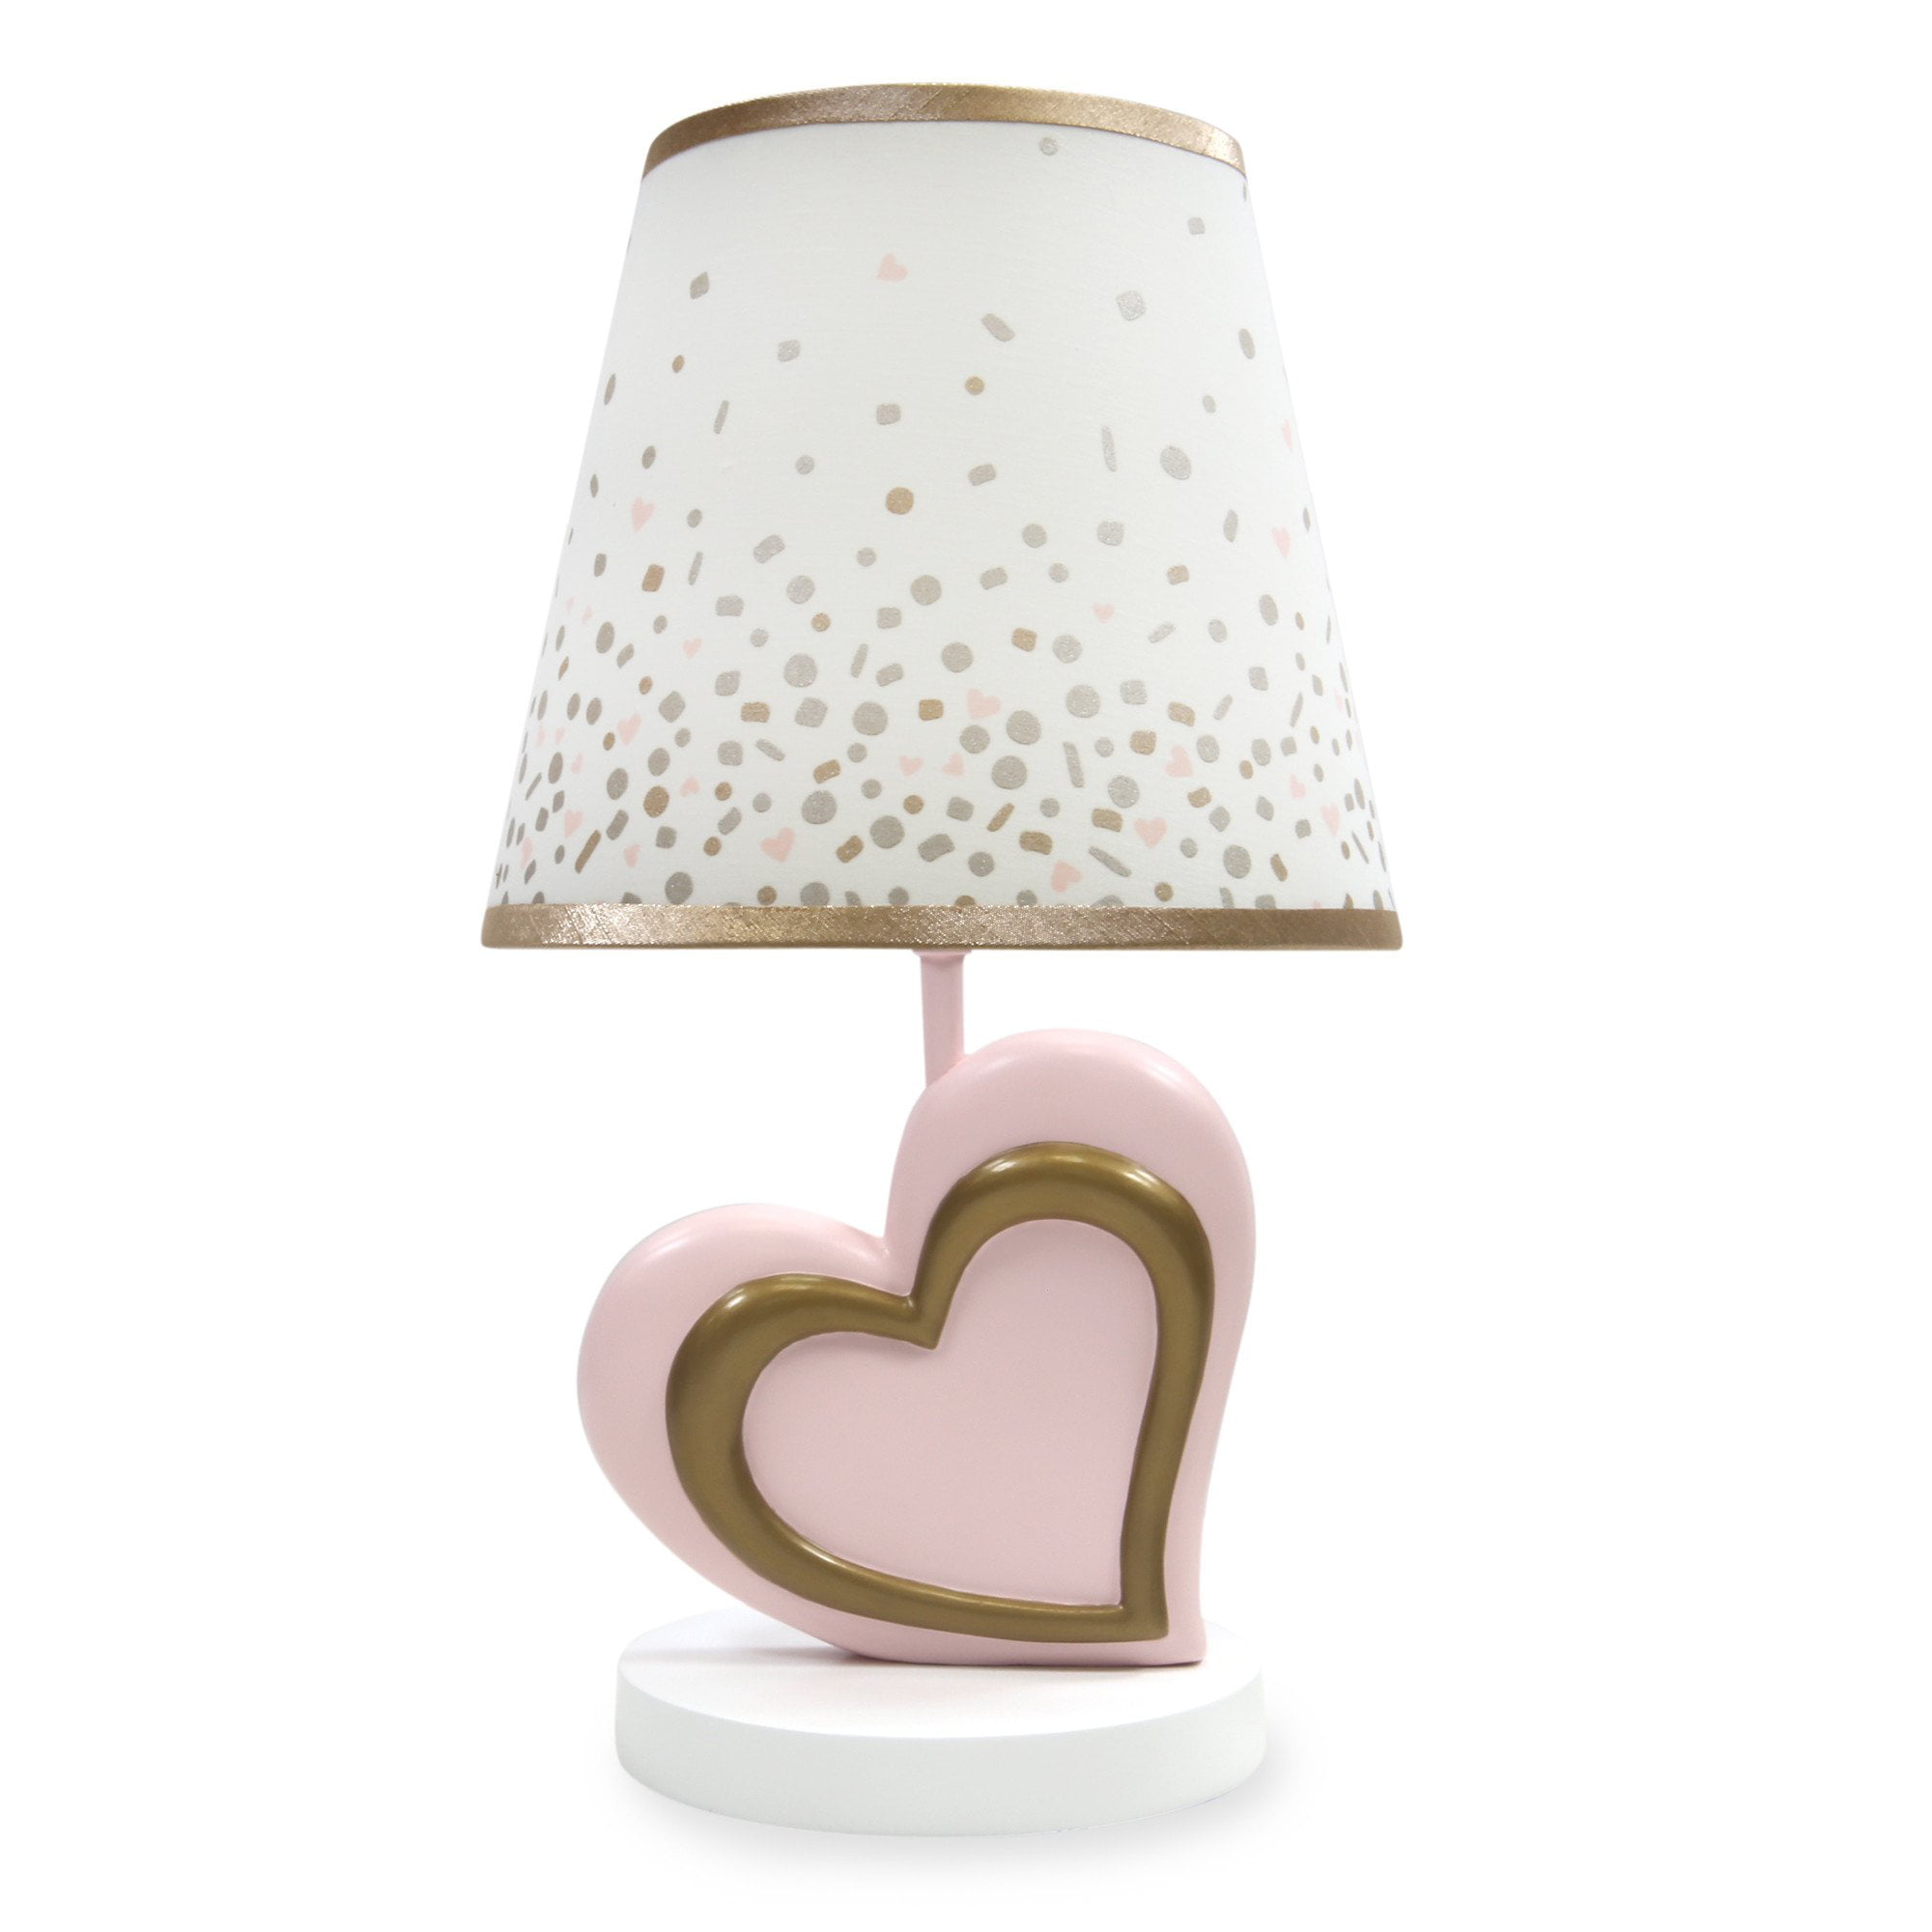 New Elegant Design Love Heart Bedside Table Lamp With Hanging Crystal Centre 